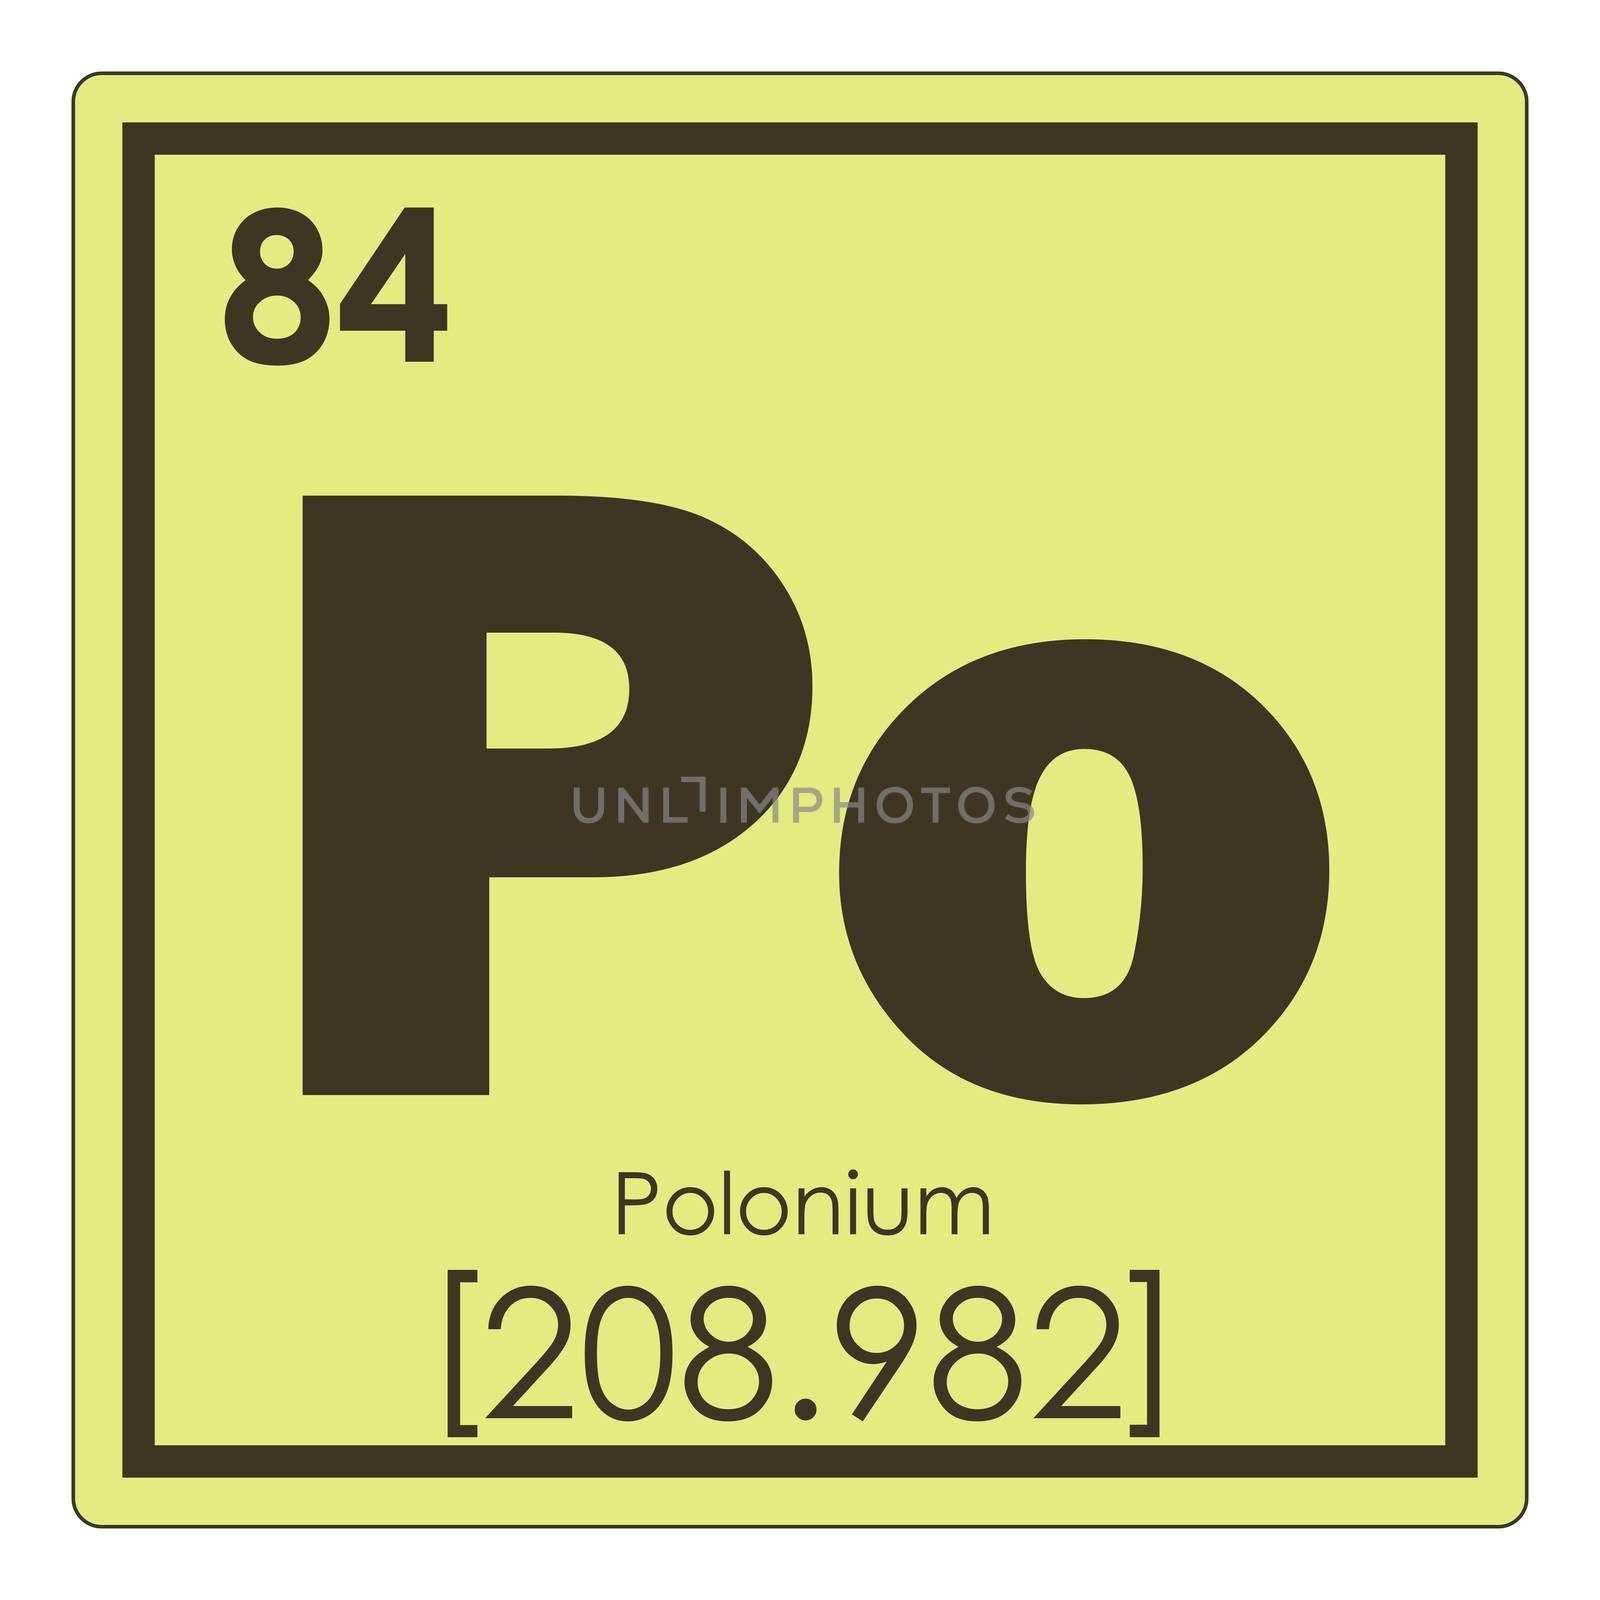 Polonium chemical element by tony4urban